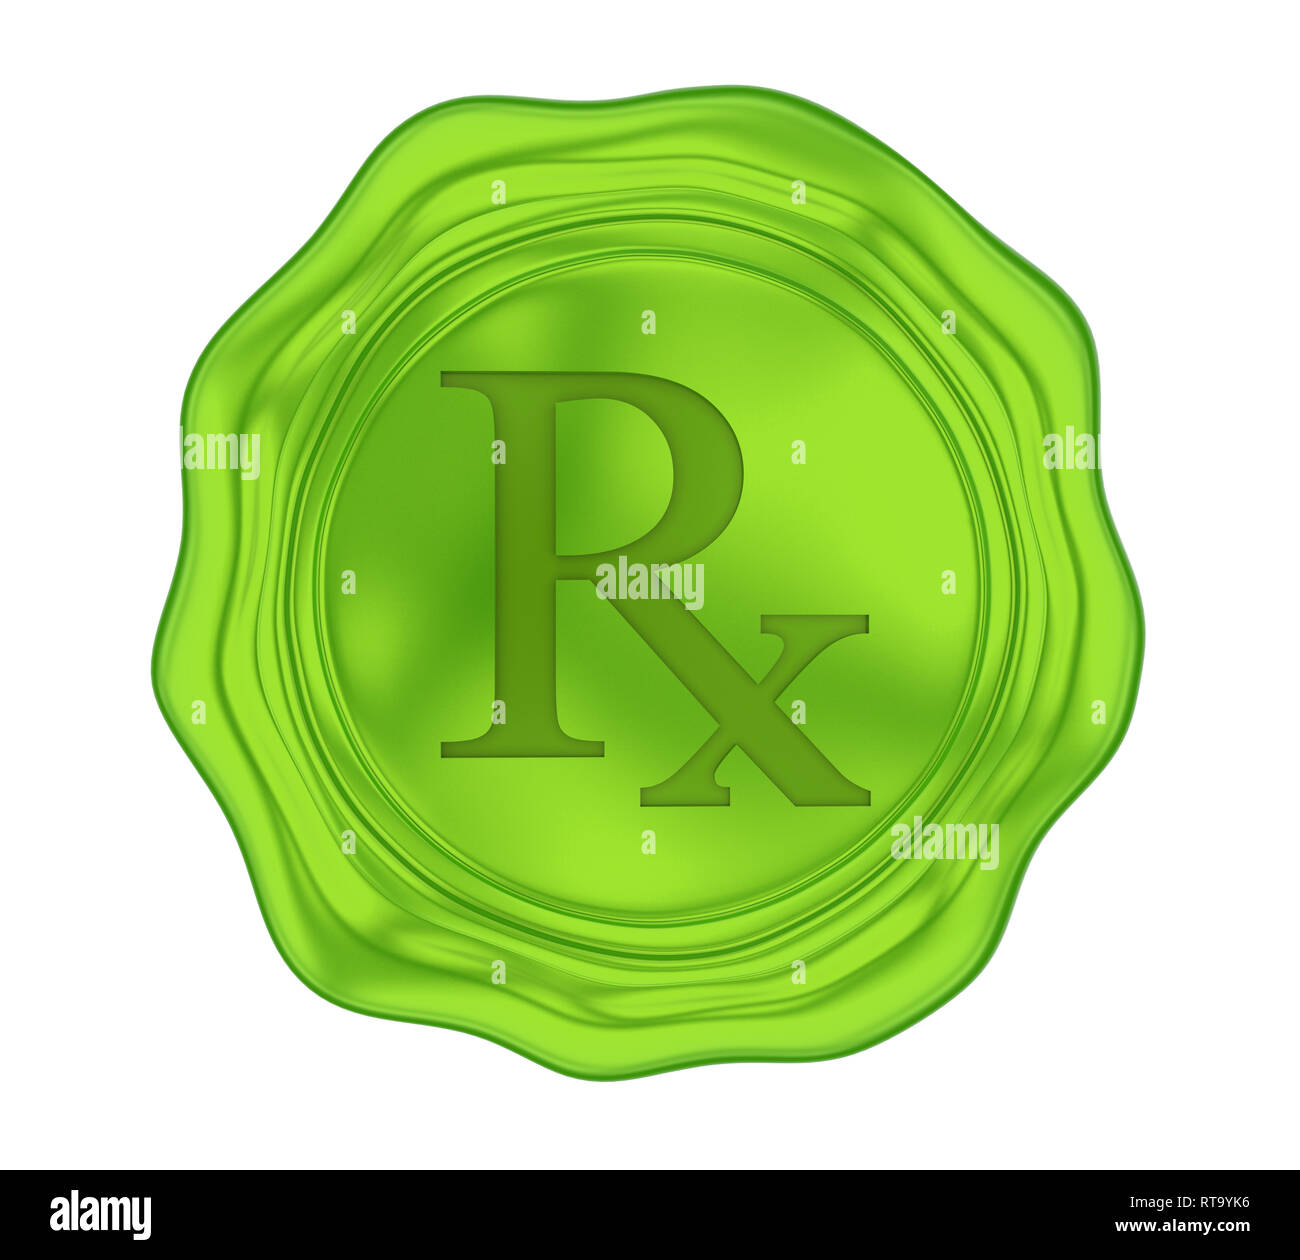 Wax Seal with RX Prescription Medicine Symbol Isolated Stock Photo